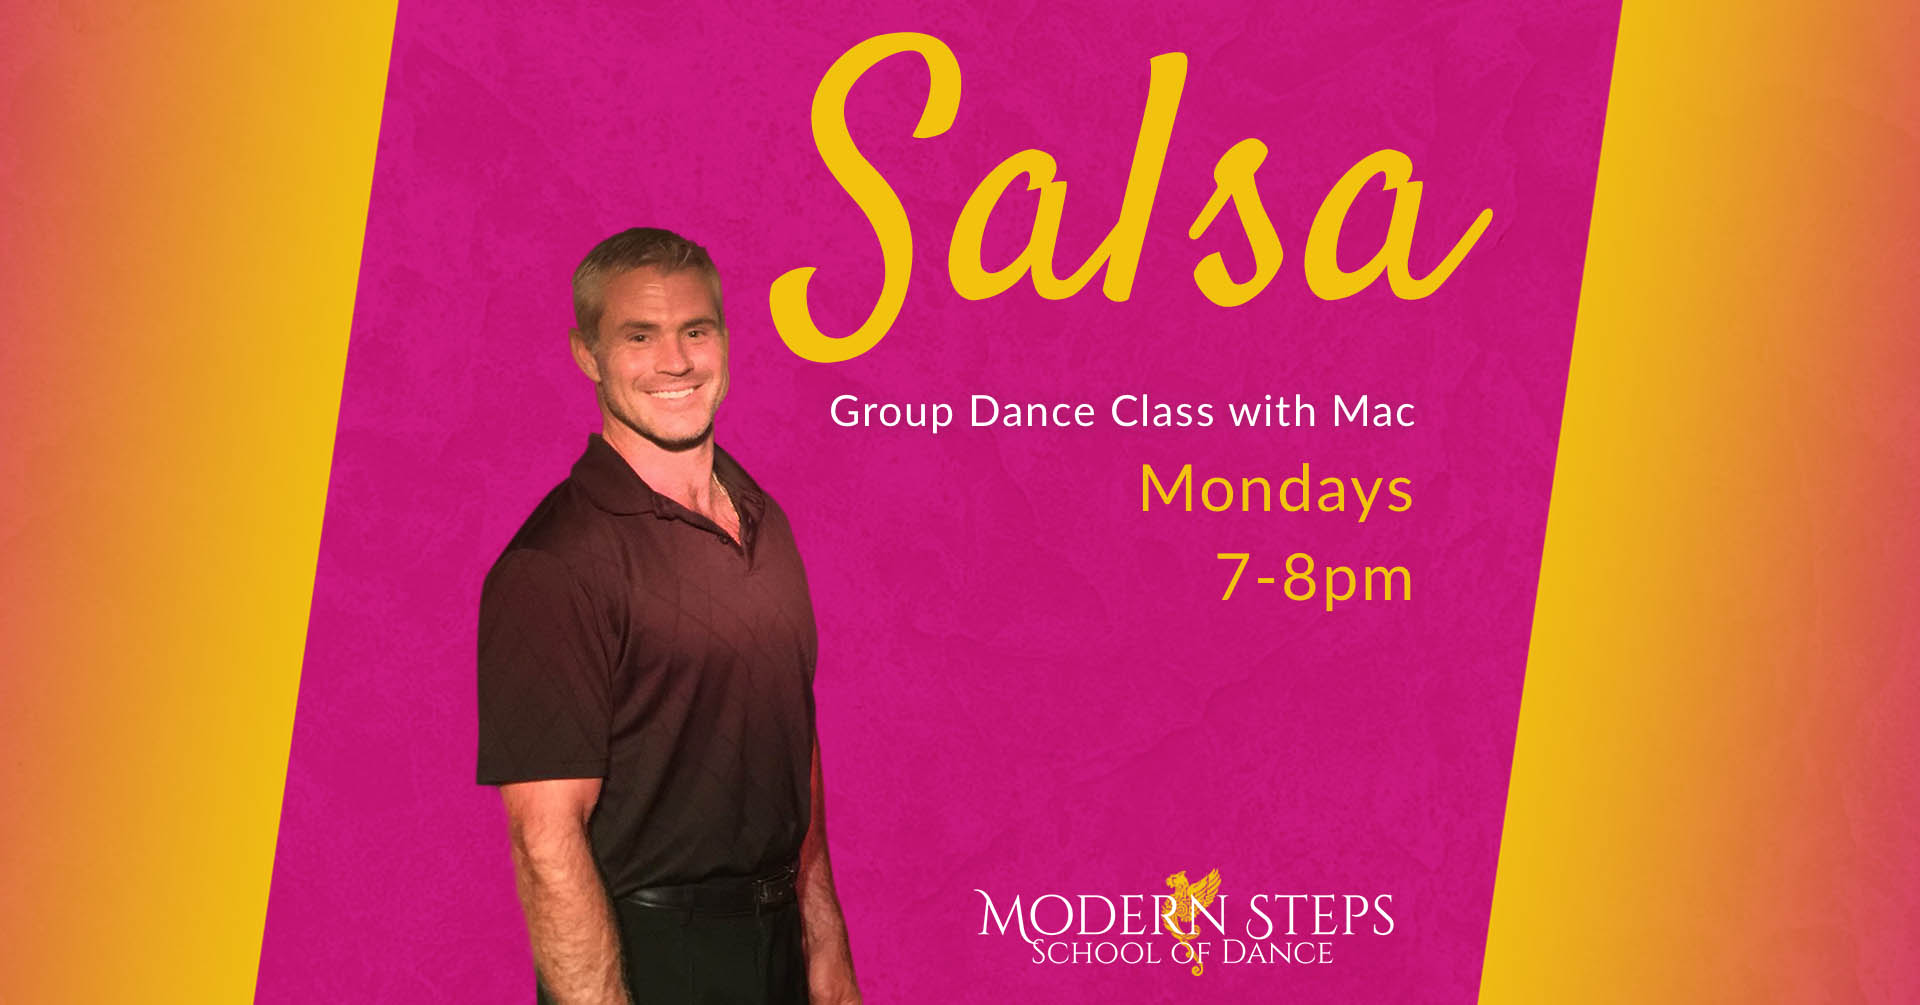 Naples Ballroom Dance Lessons - Salsa Dancing - Modern Steps School of Dance - Naples Florida